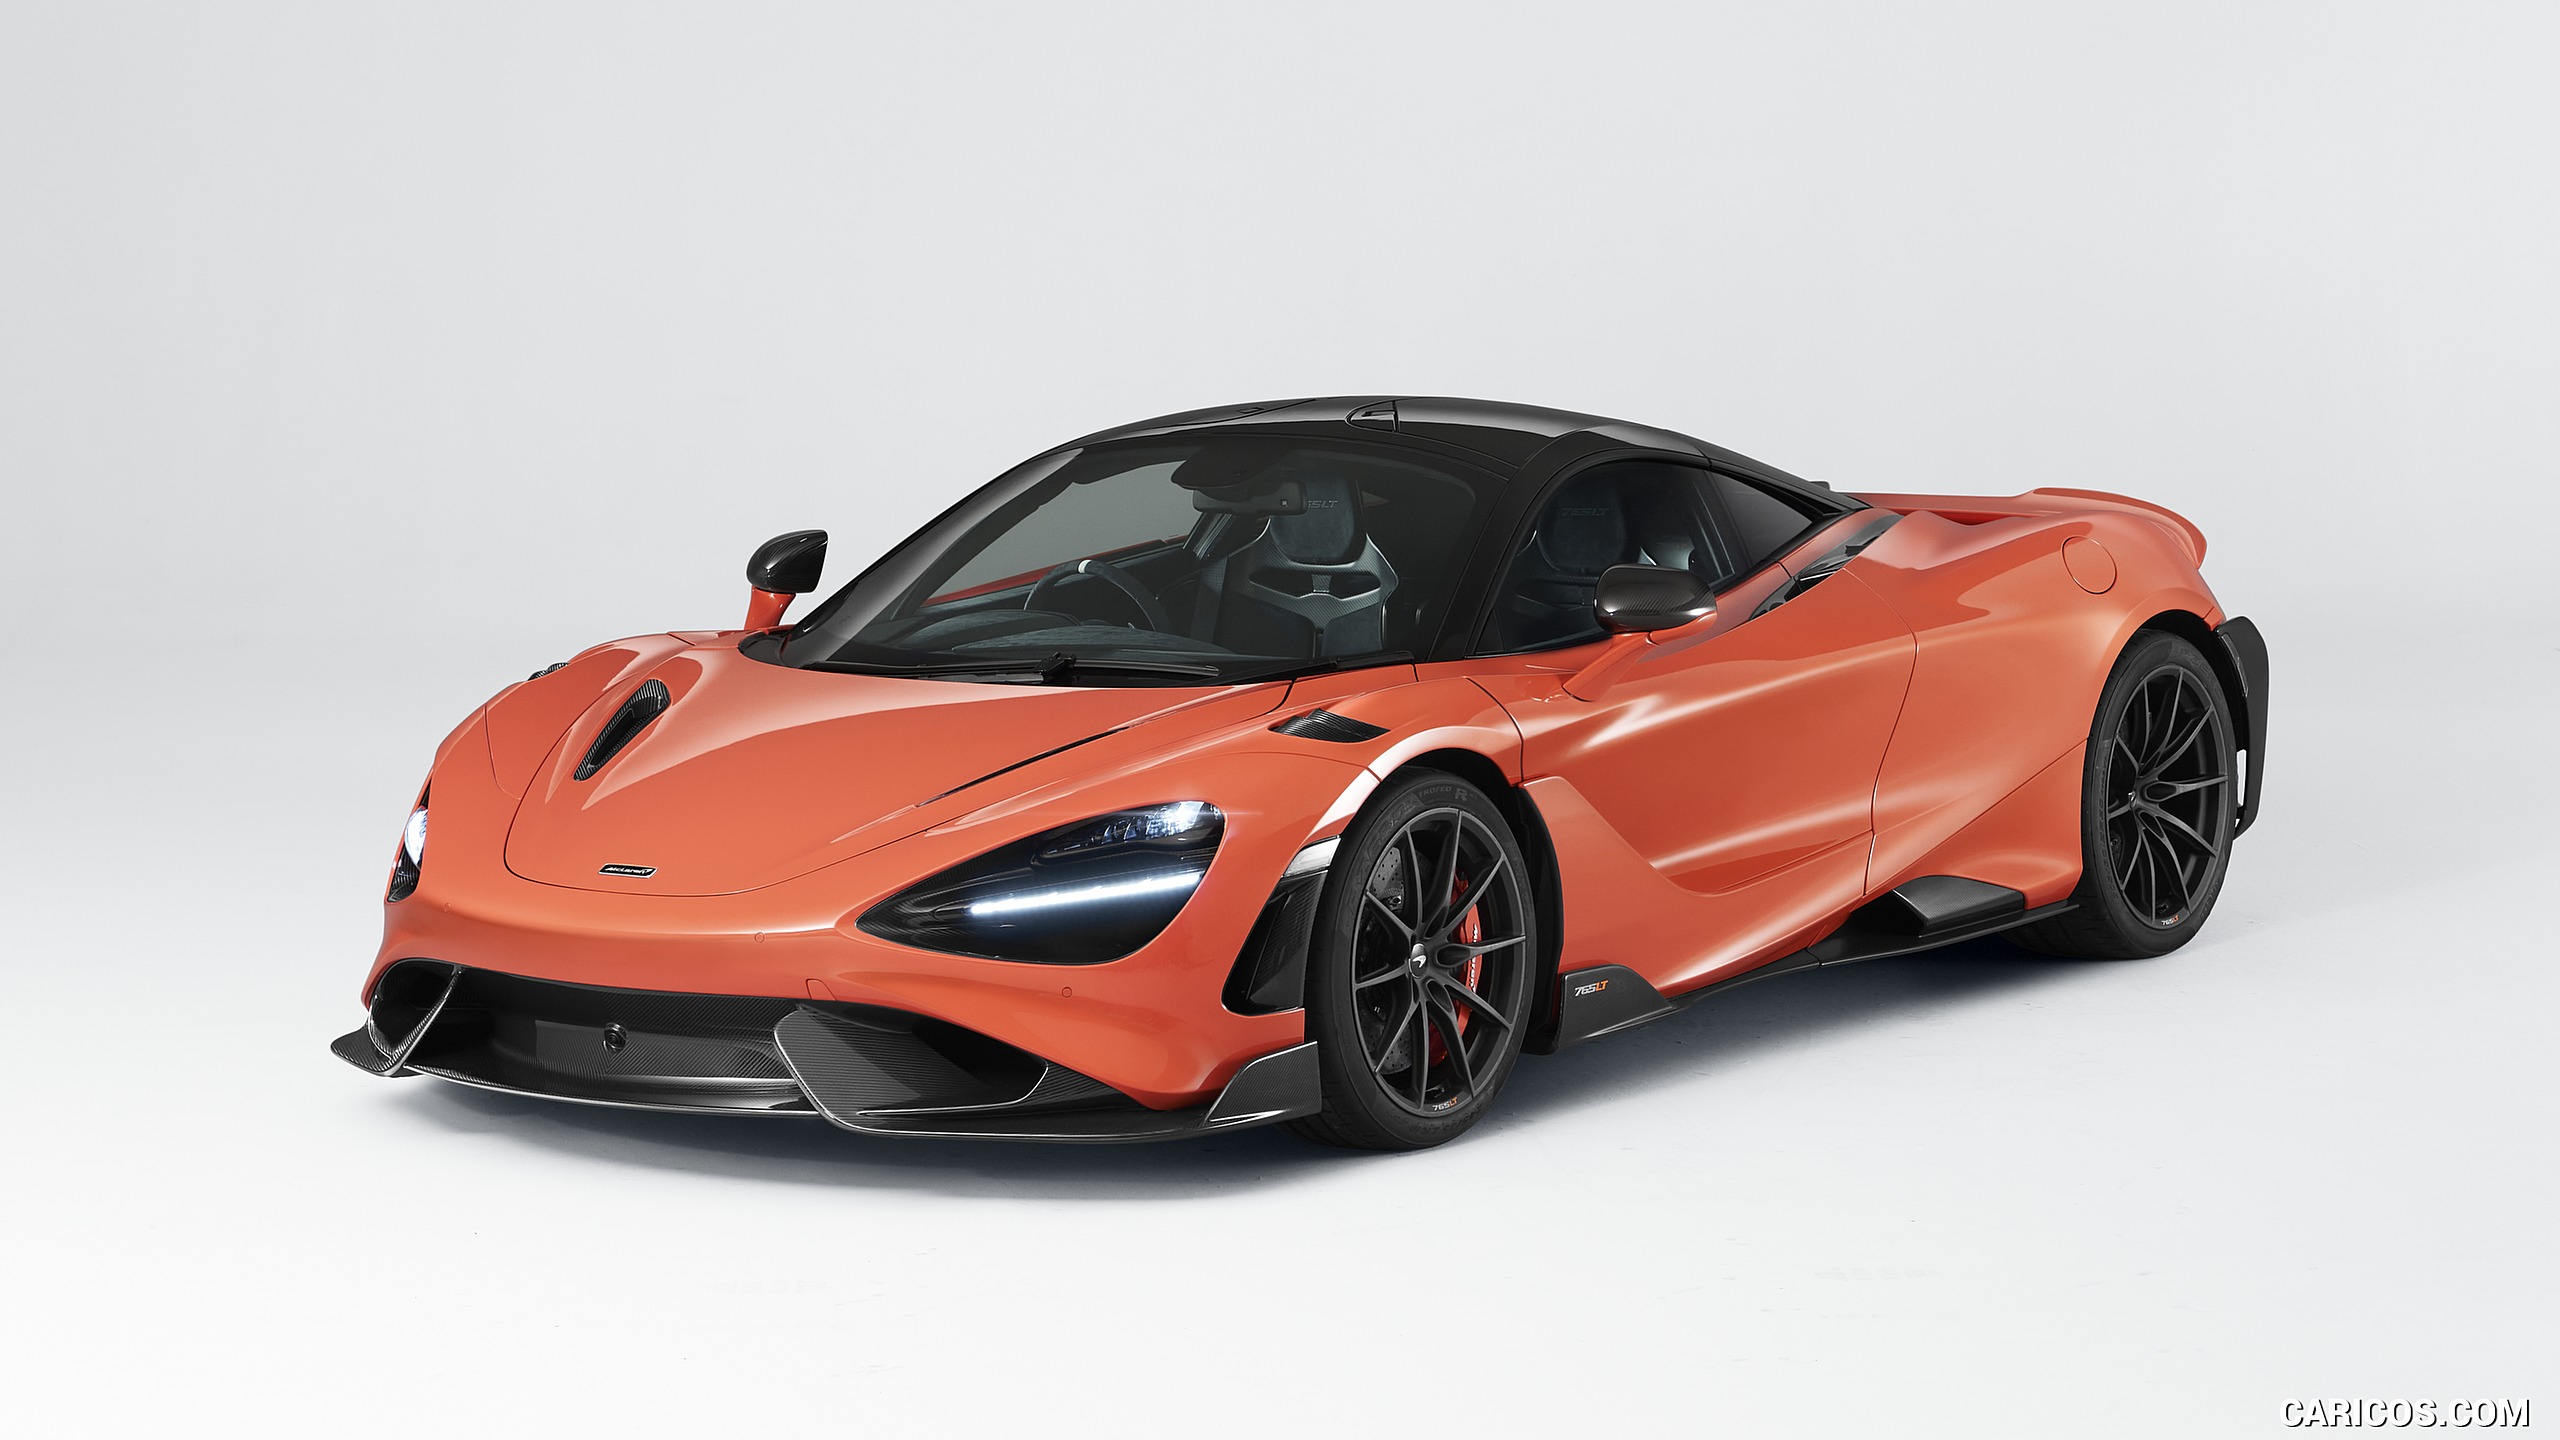 2021 McLaren 765LT - Front Three-Quarter, #16 of 159